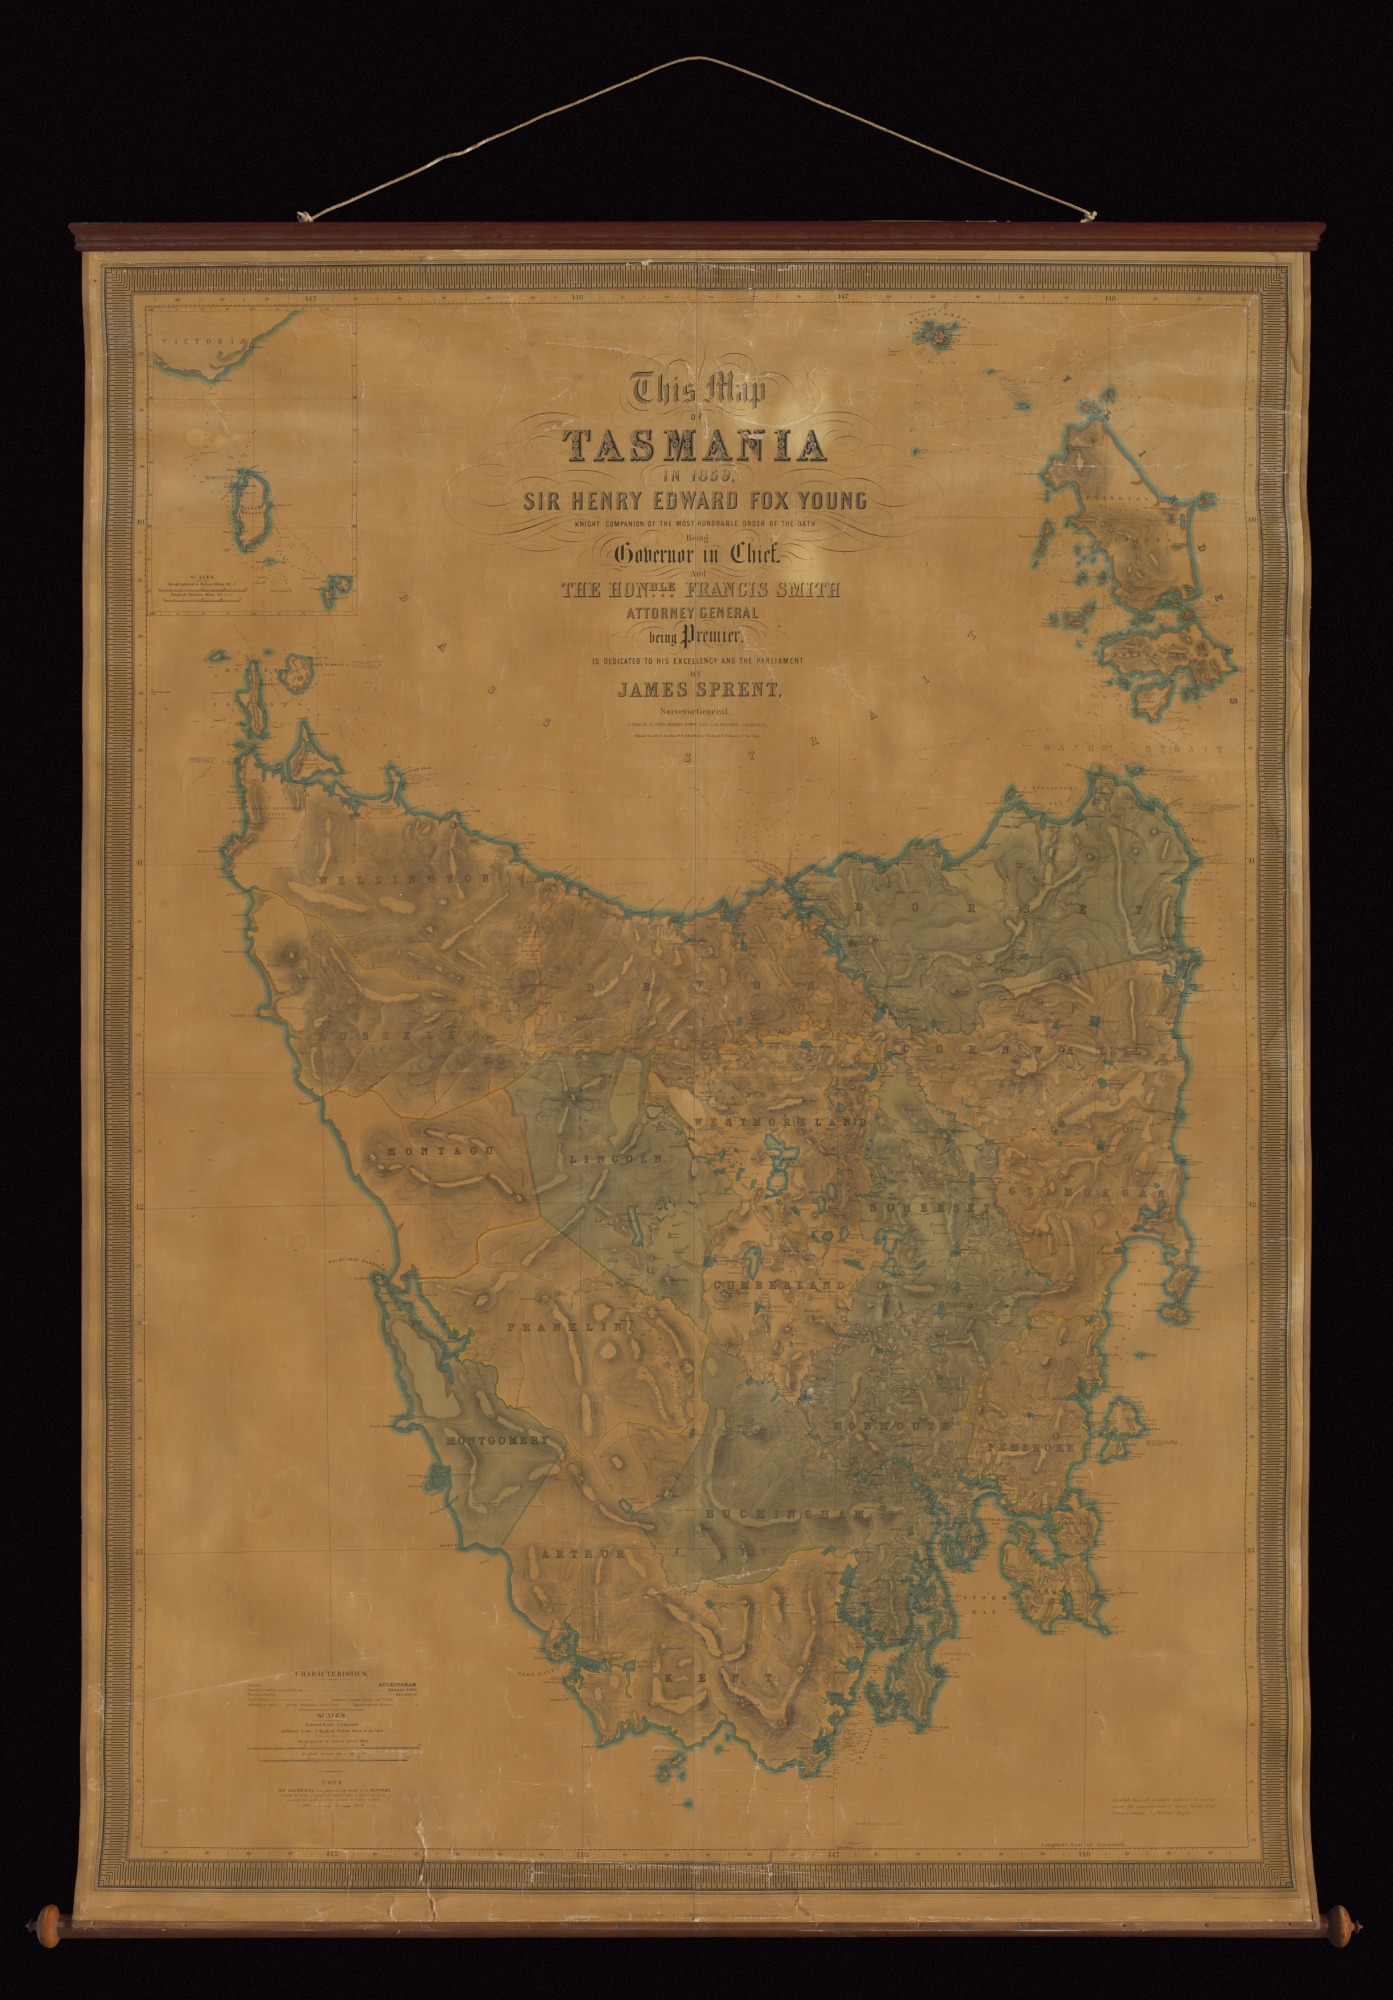 Map of Tasmania by James Sprent, 1859.